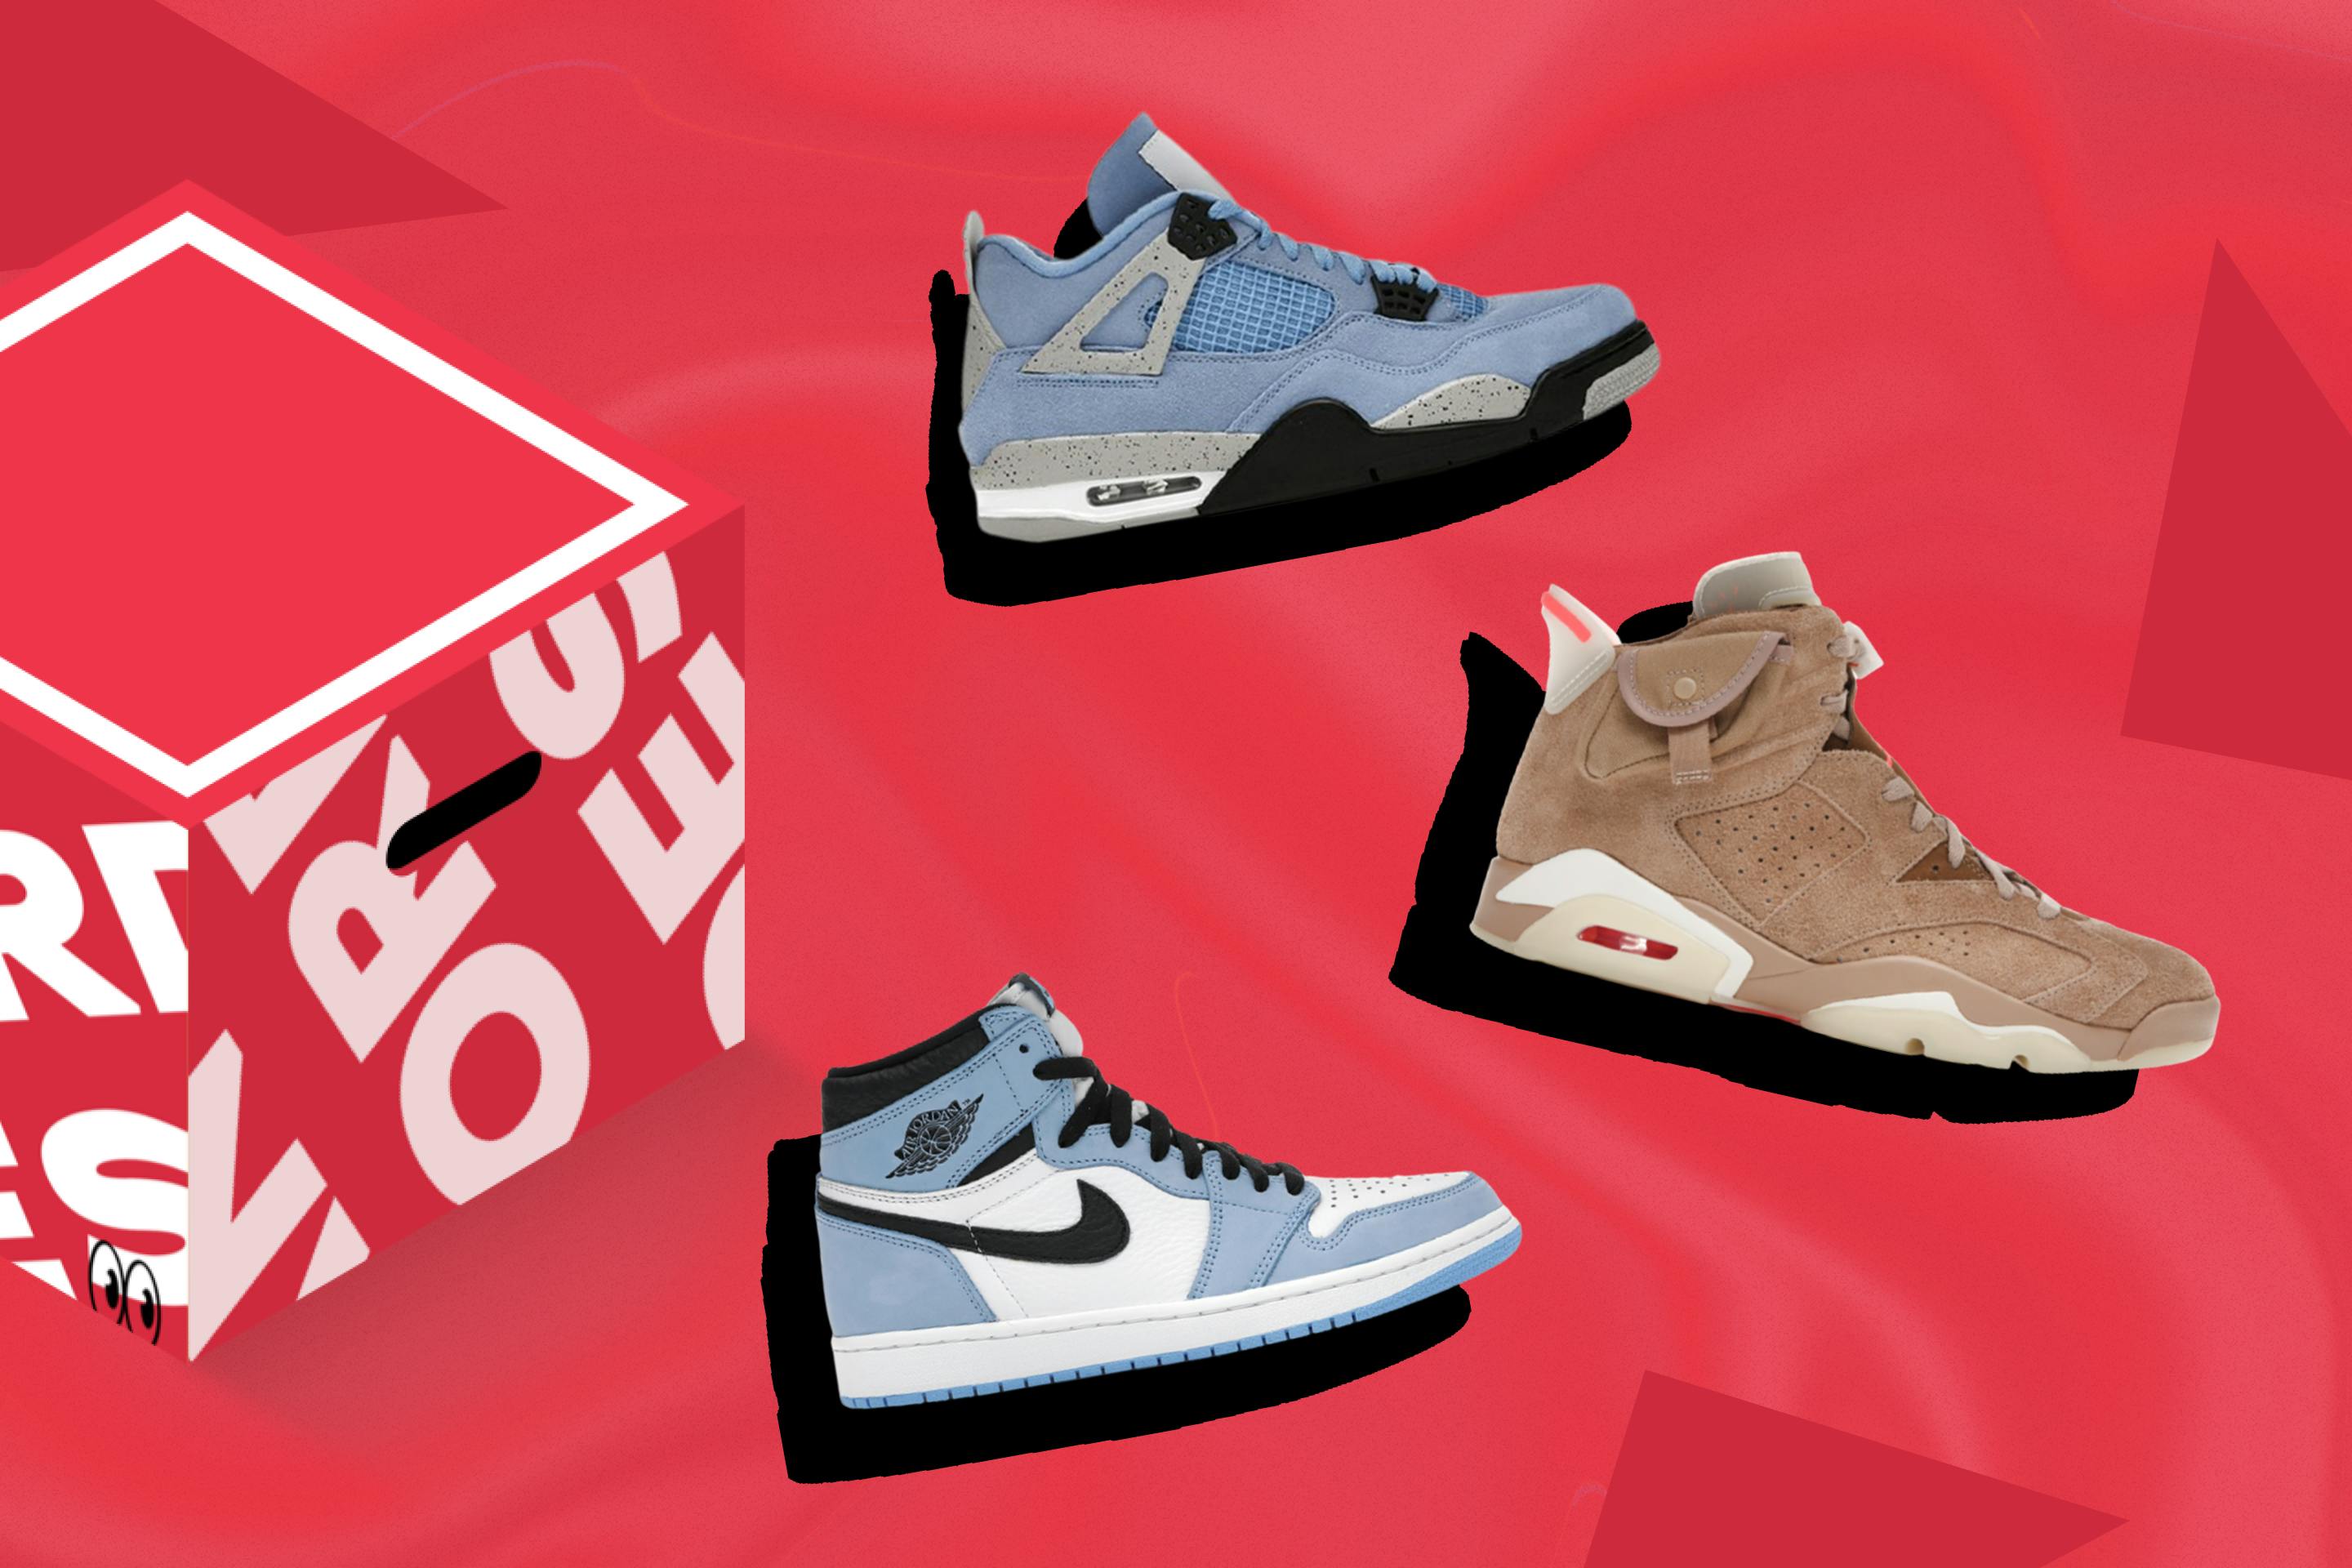 Decepción Tranvía Personalmente 9 Summer Sneakers You Can Get Inside the Jordan Shoes Mystery Box | Hybe.com